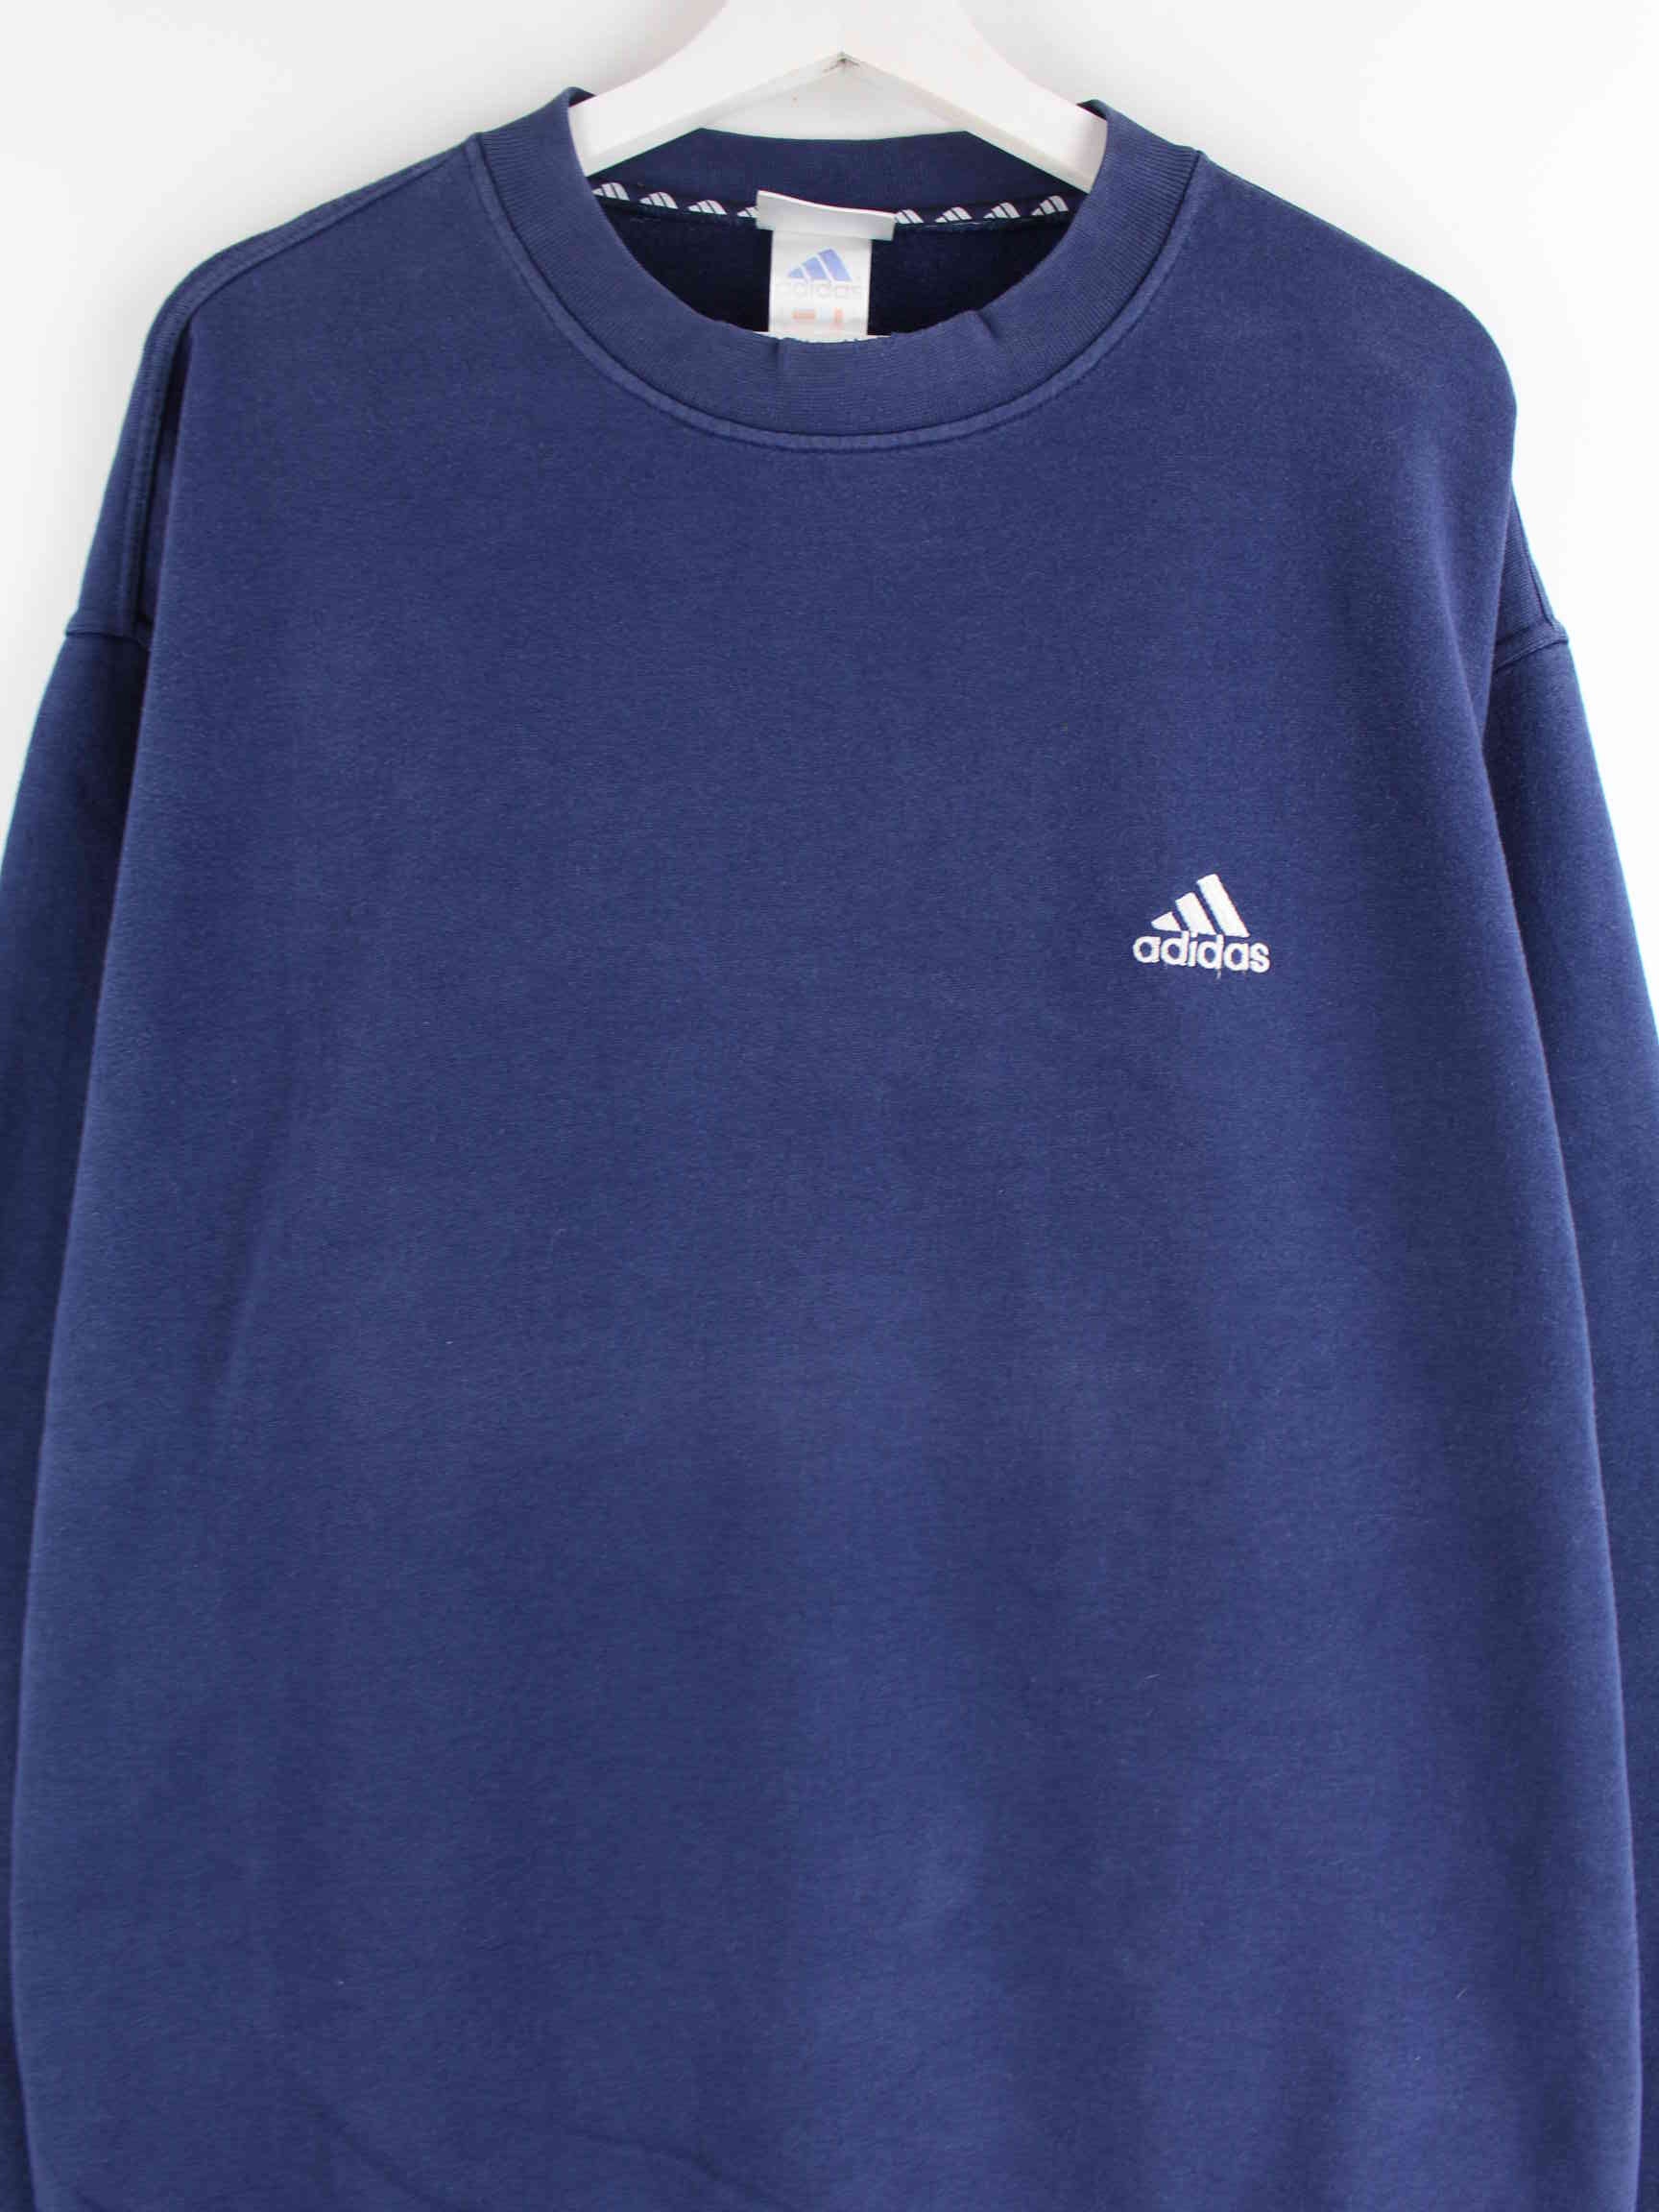 Adidas 90s Vintage Embroidered Sweater Blau XL (detail image 1)